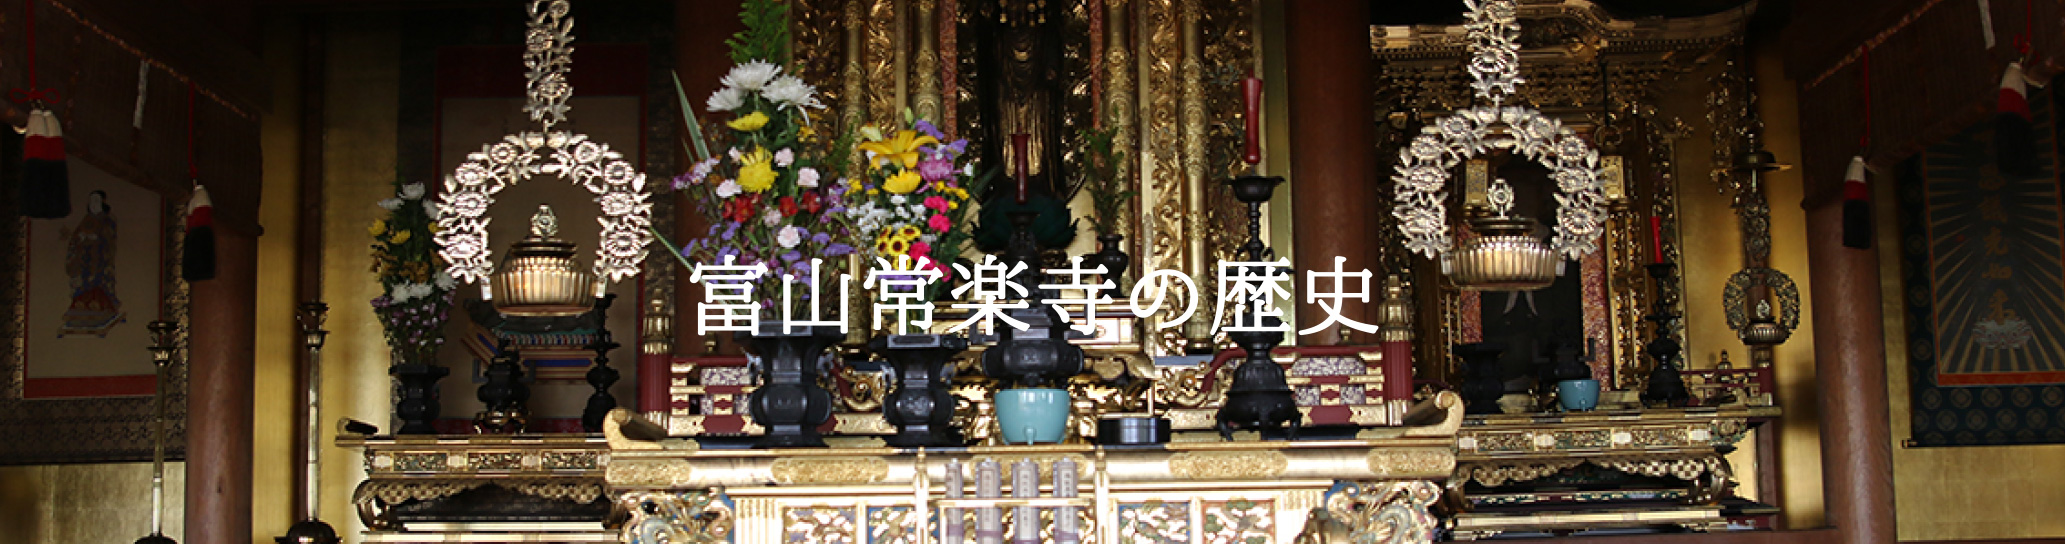 富山常楽寺の歴史